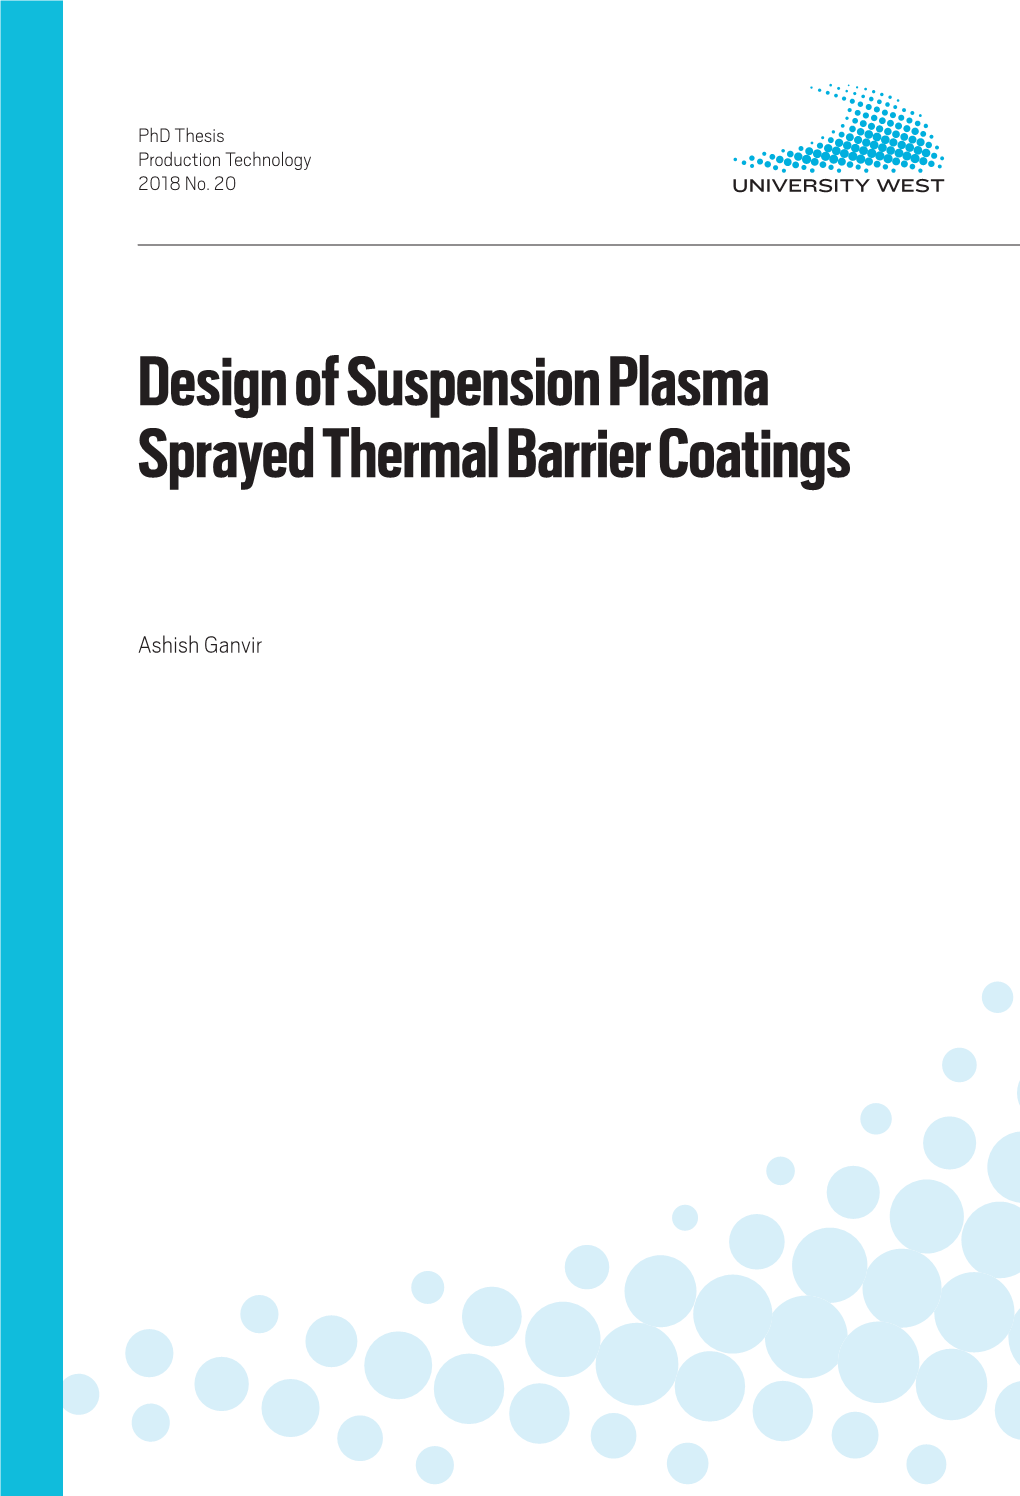 Design of Suspension Plasma Sprayed Thermal Barrier Coatings